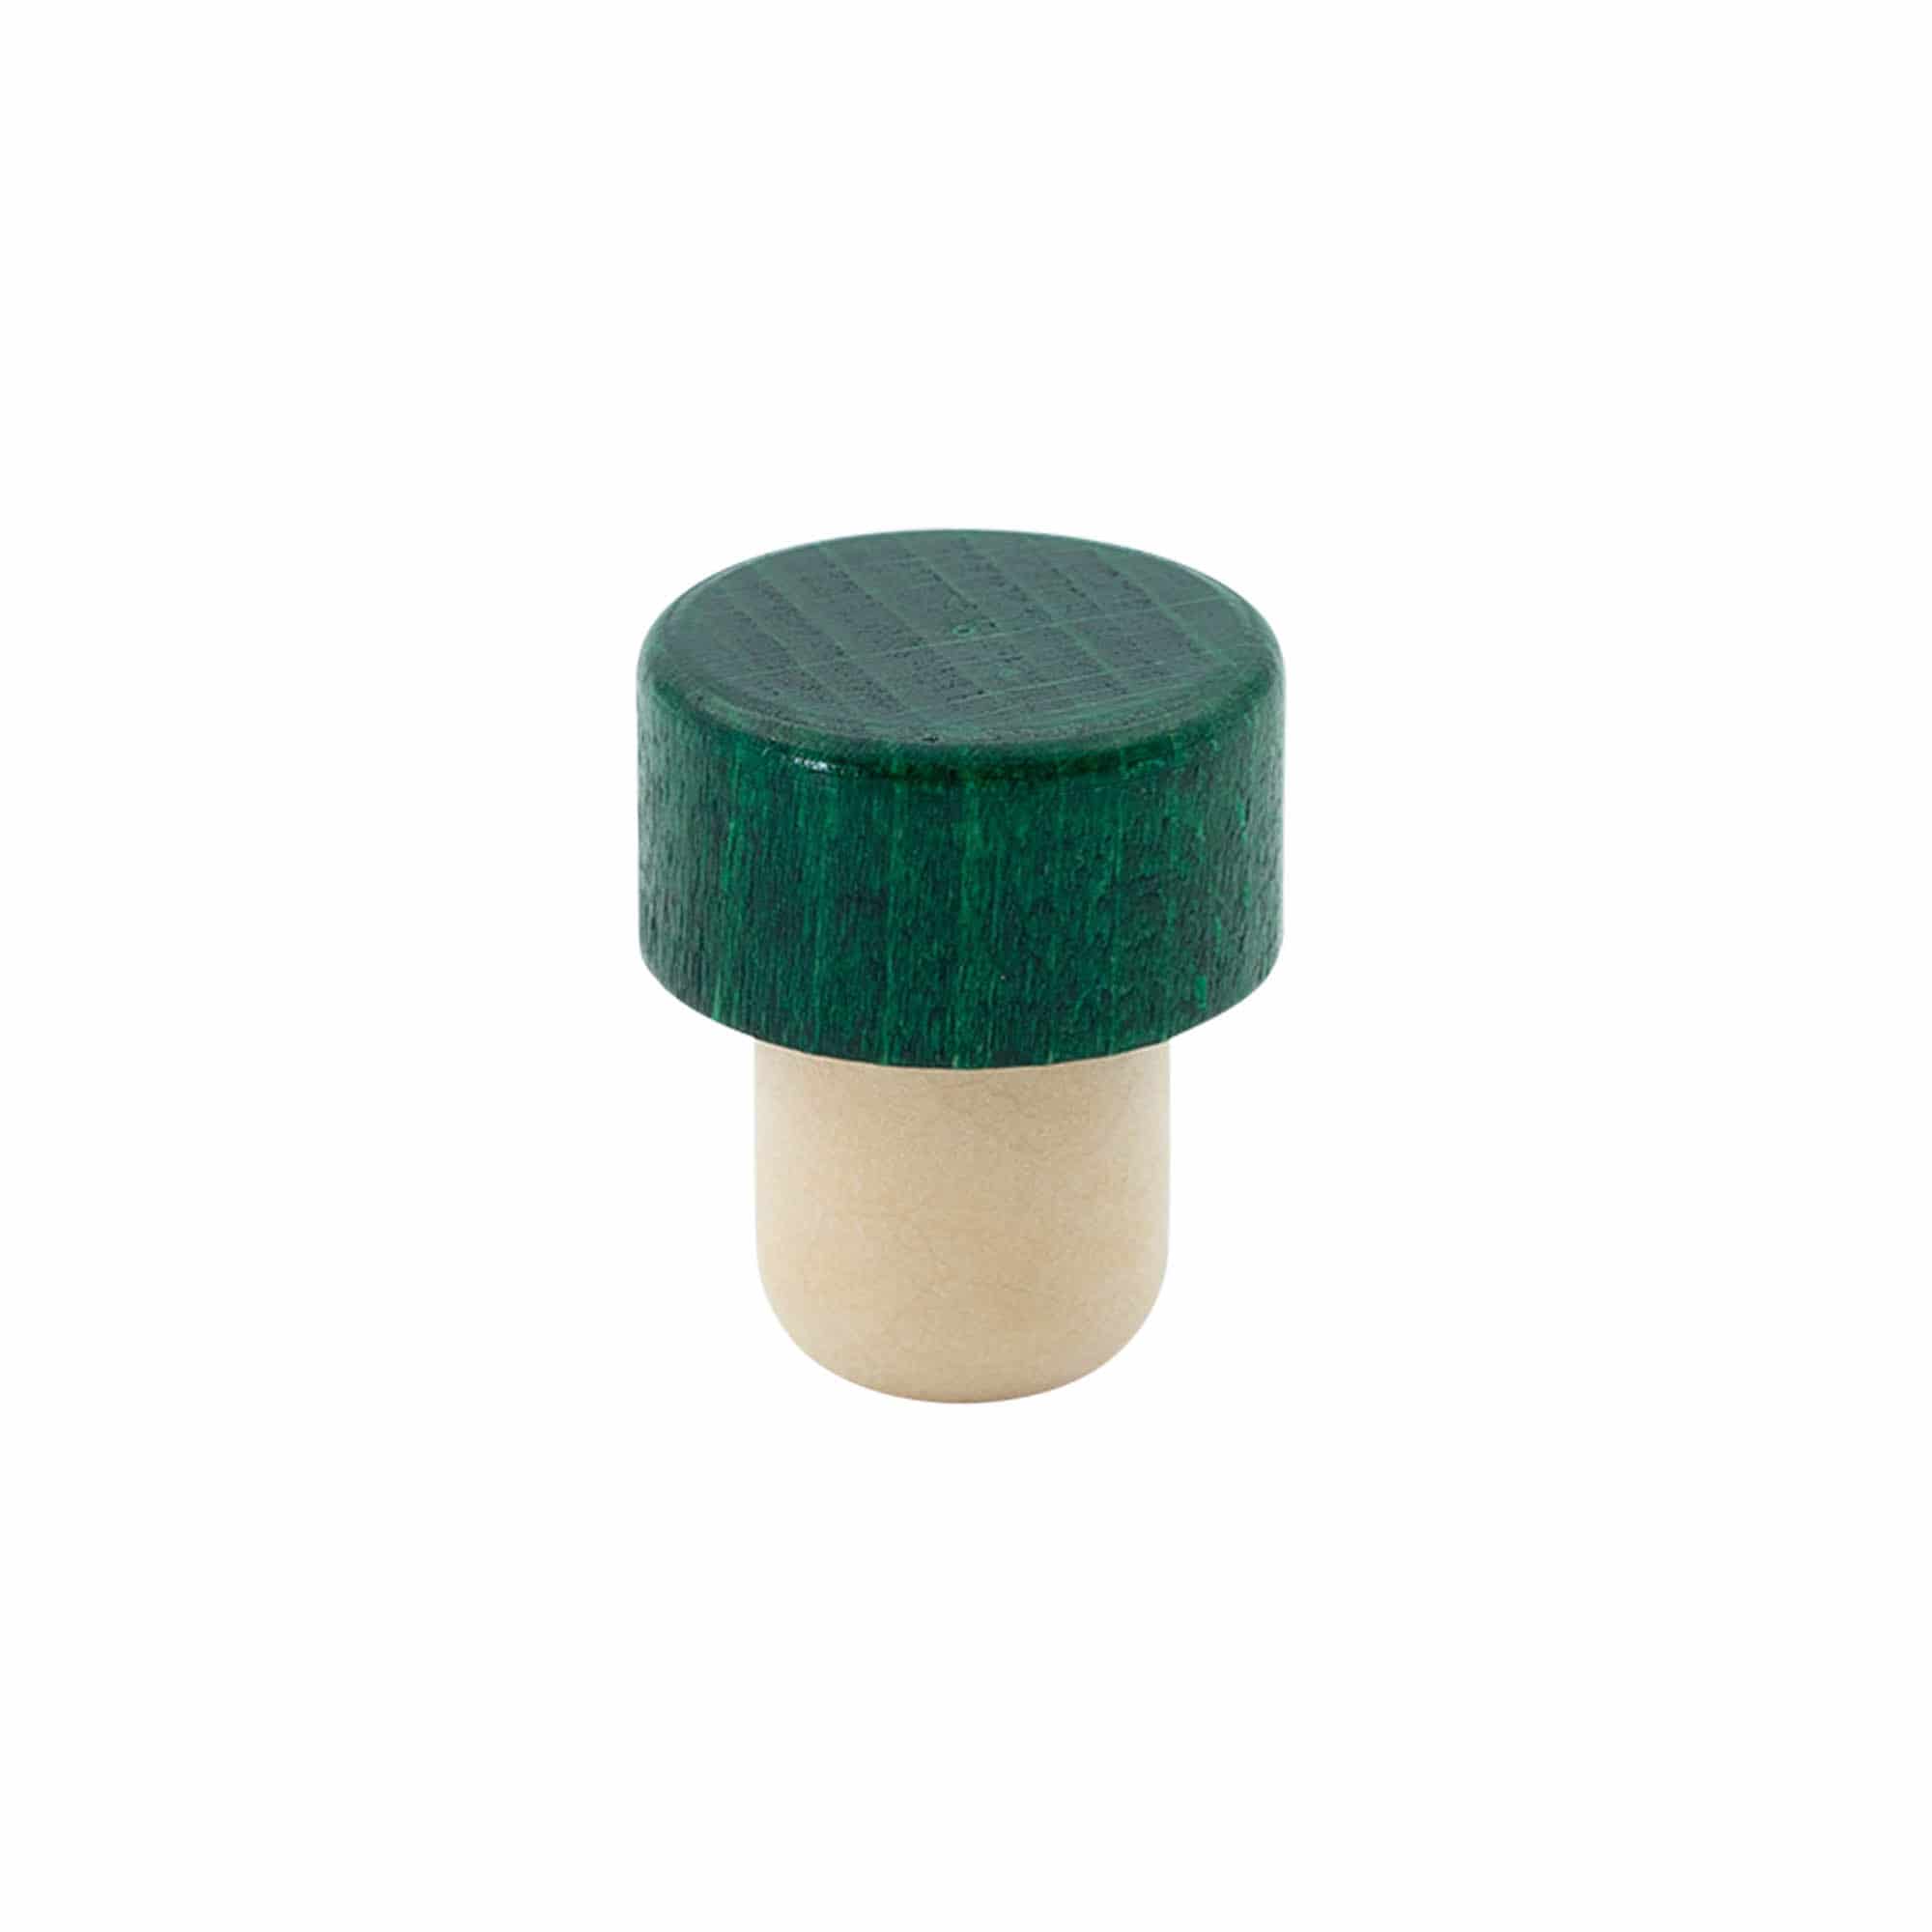 19 mm mushroom cork, wood, green, for opening: cork